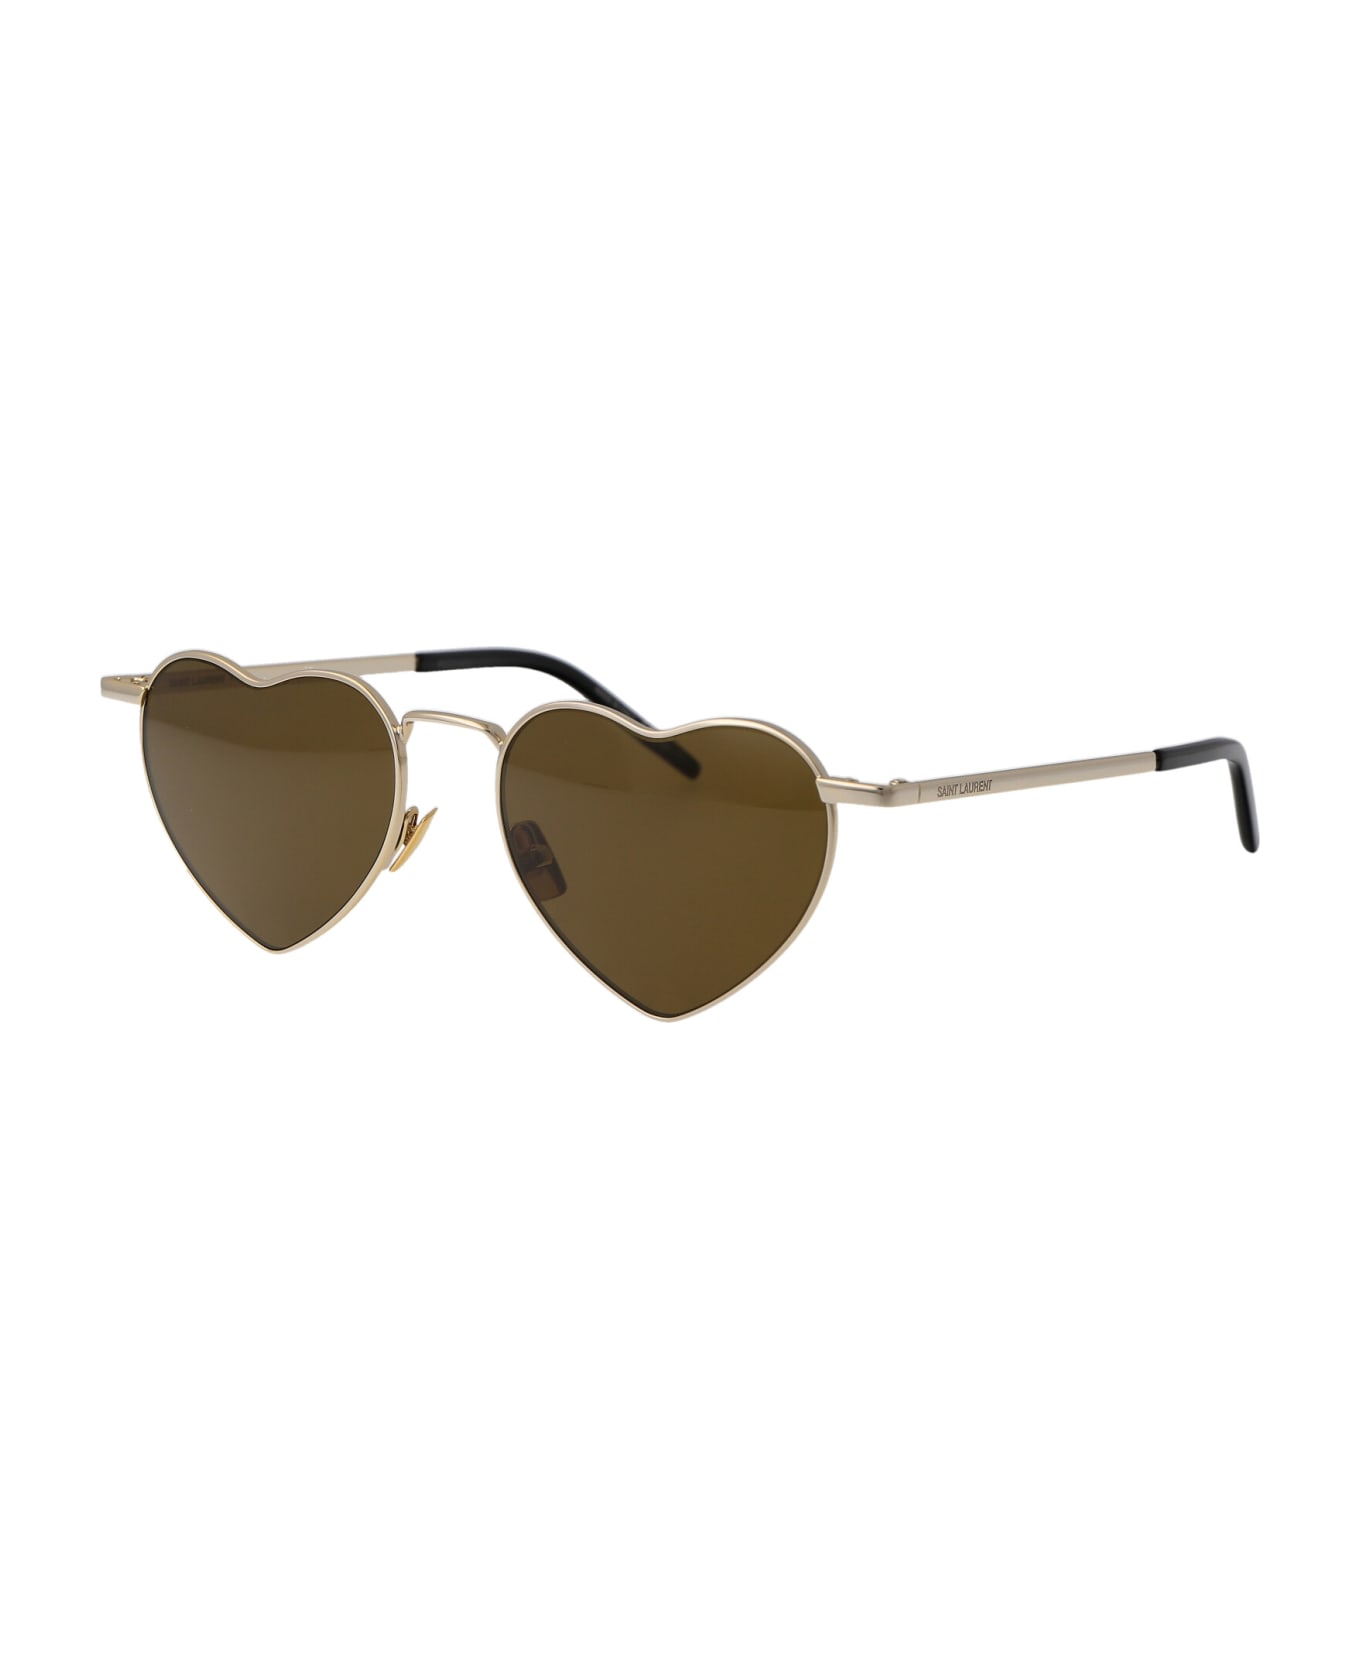 Saint Laurent Eyewear Sl 301 Loulou Sunglasses - 015 GOLD GOLD BROWN